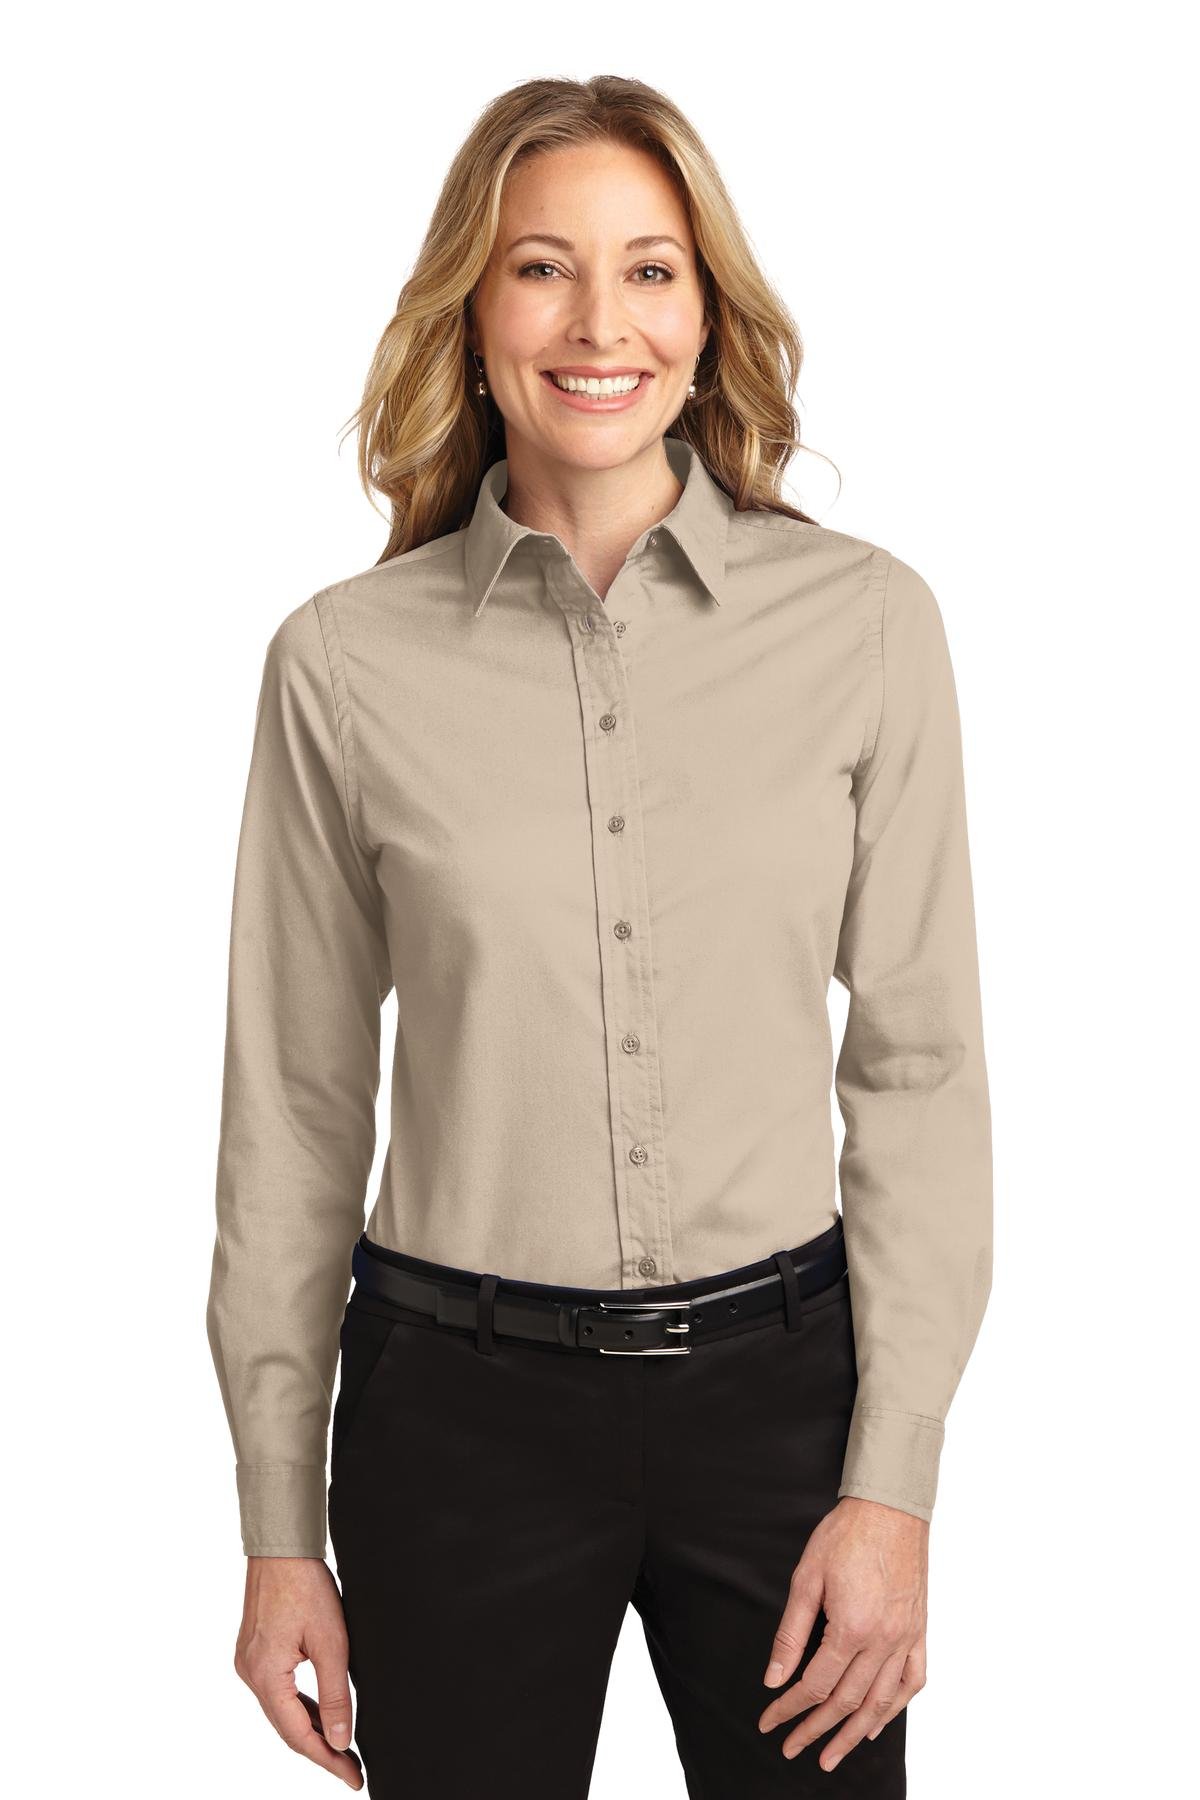 Port Authority Long Sleeve Shirt (L608)